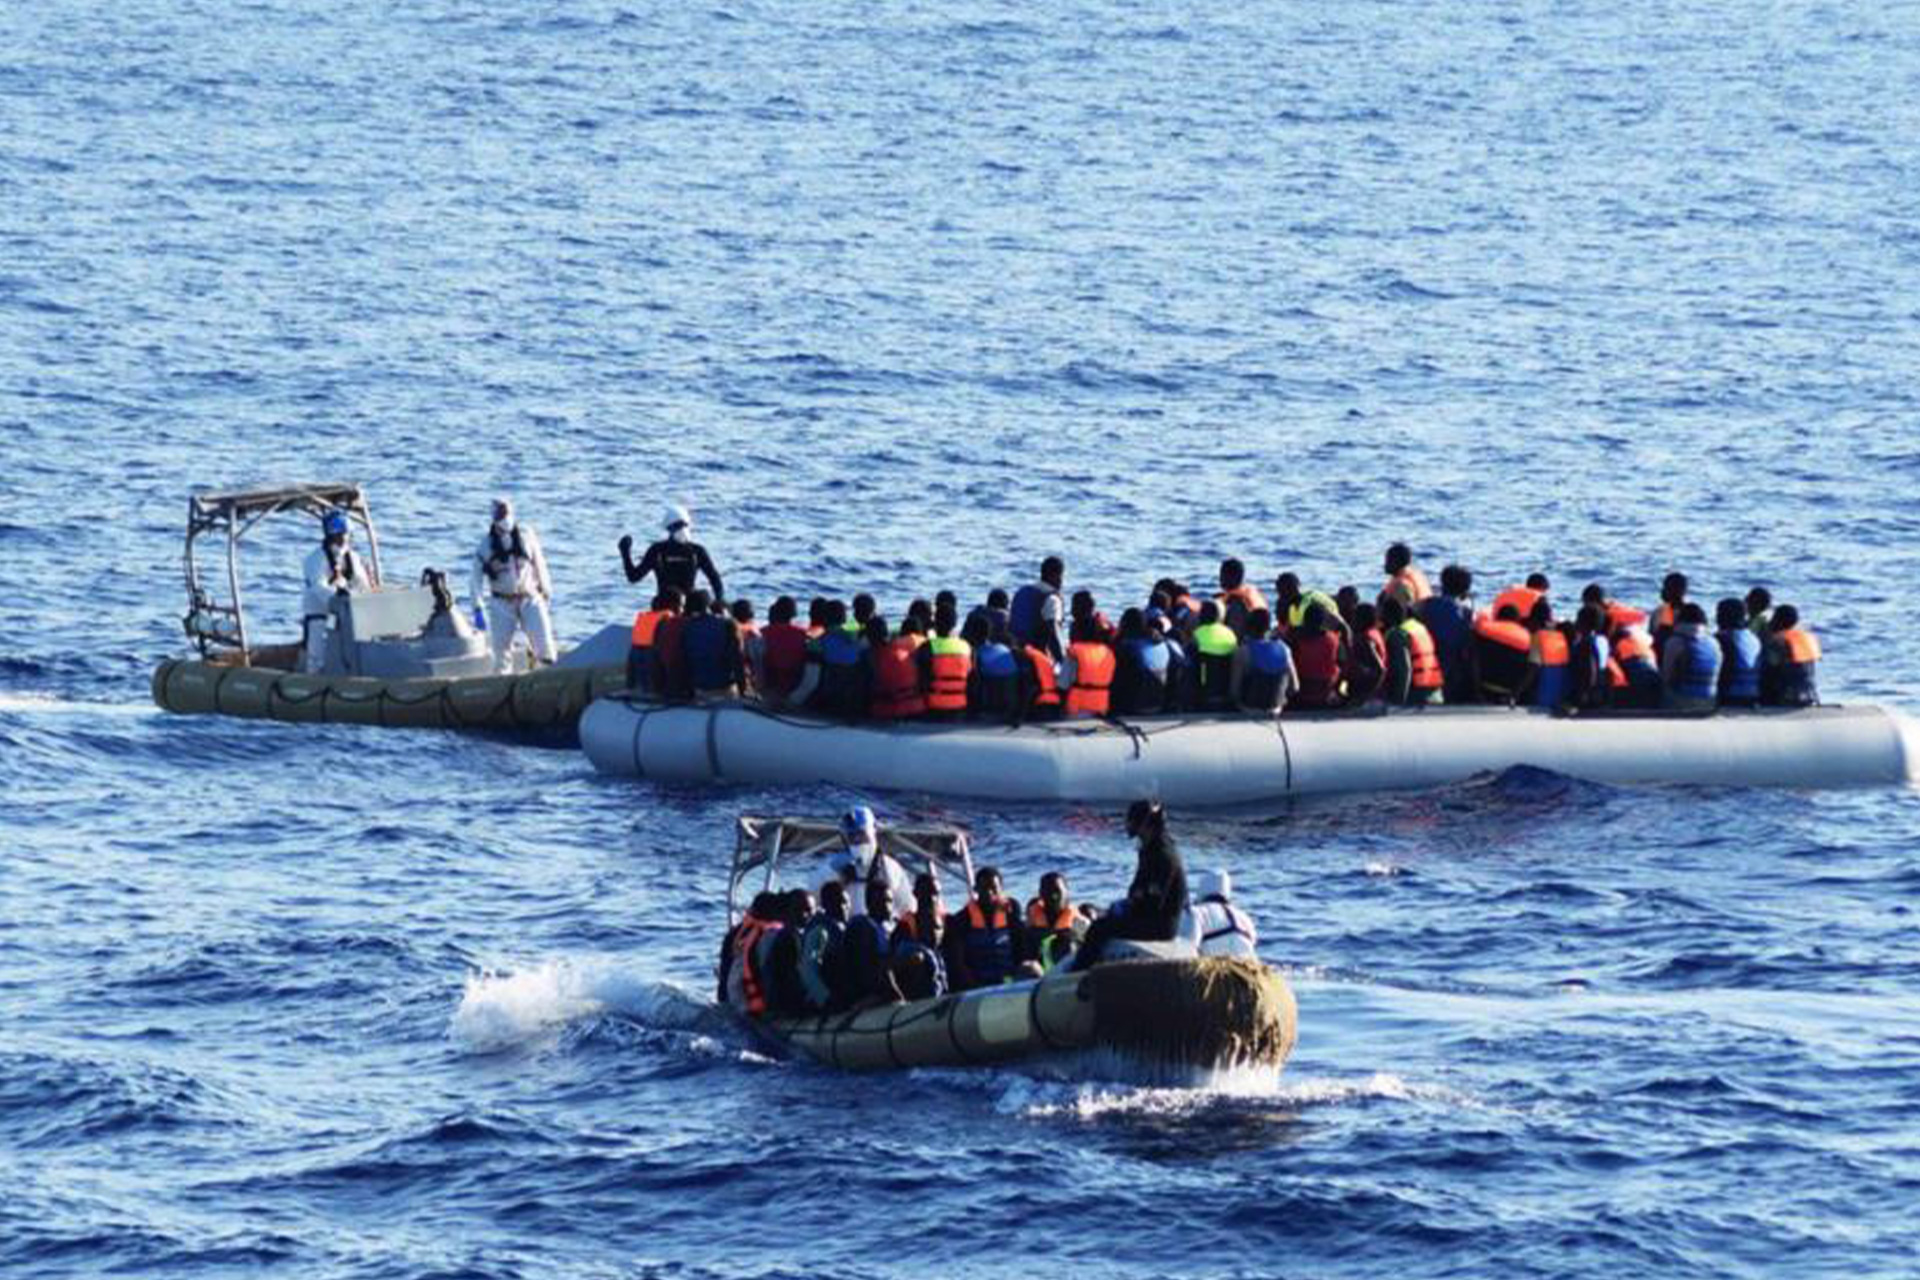 anija me emigrante fundoset ne brigjet e turqise 8 te vdekur 2 jane femije